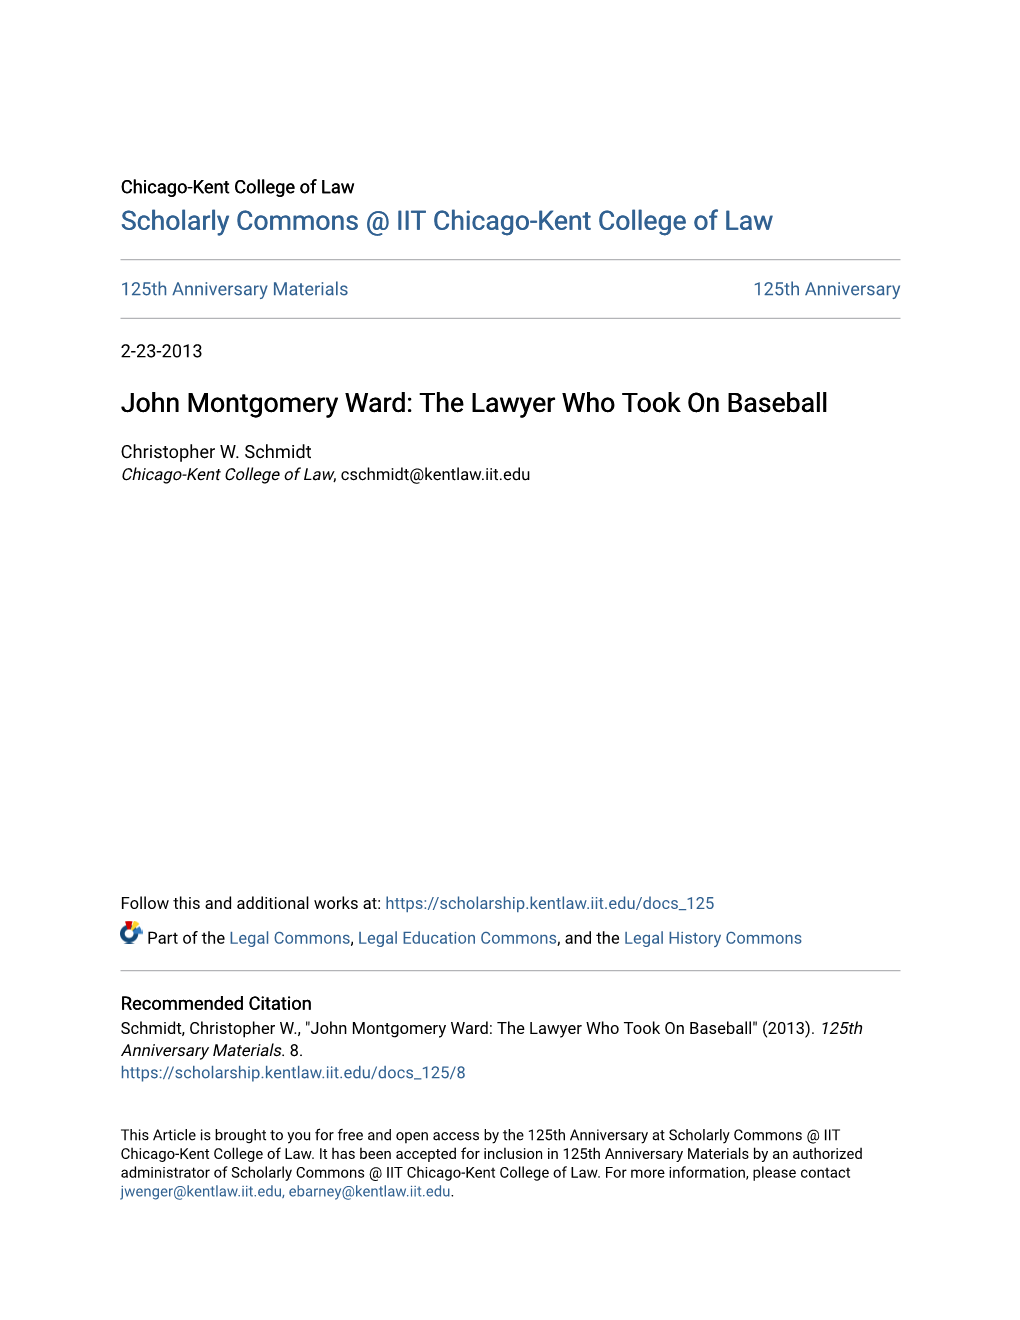 John Montgomery Ward: the Lawyer Who Took on Baseball